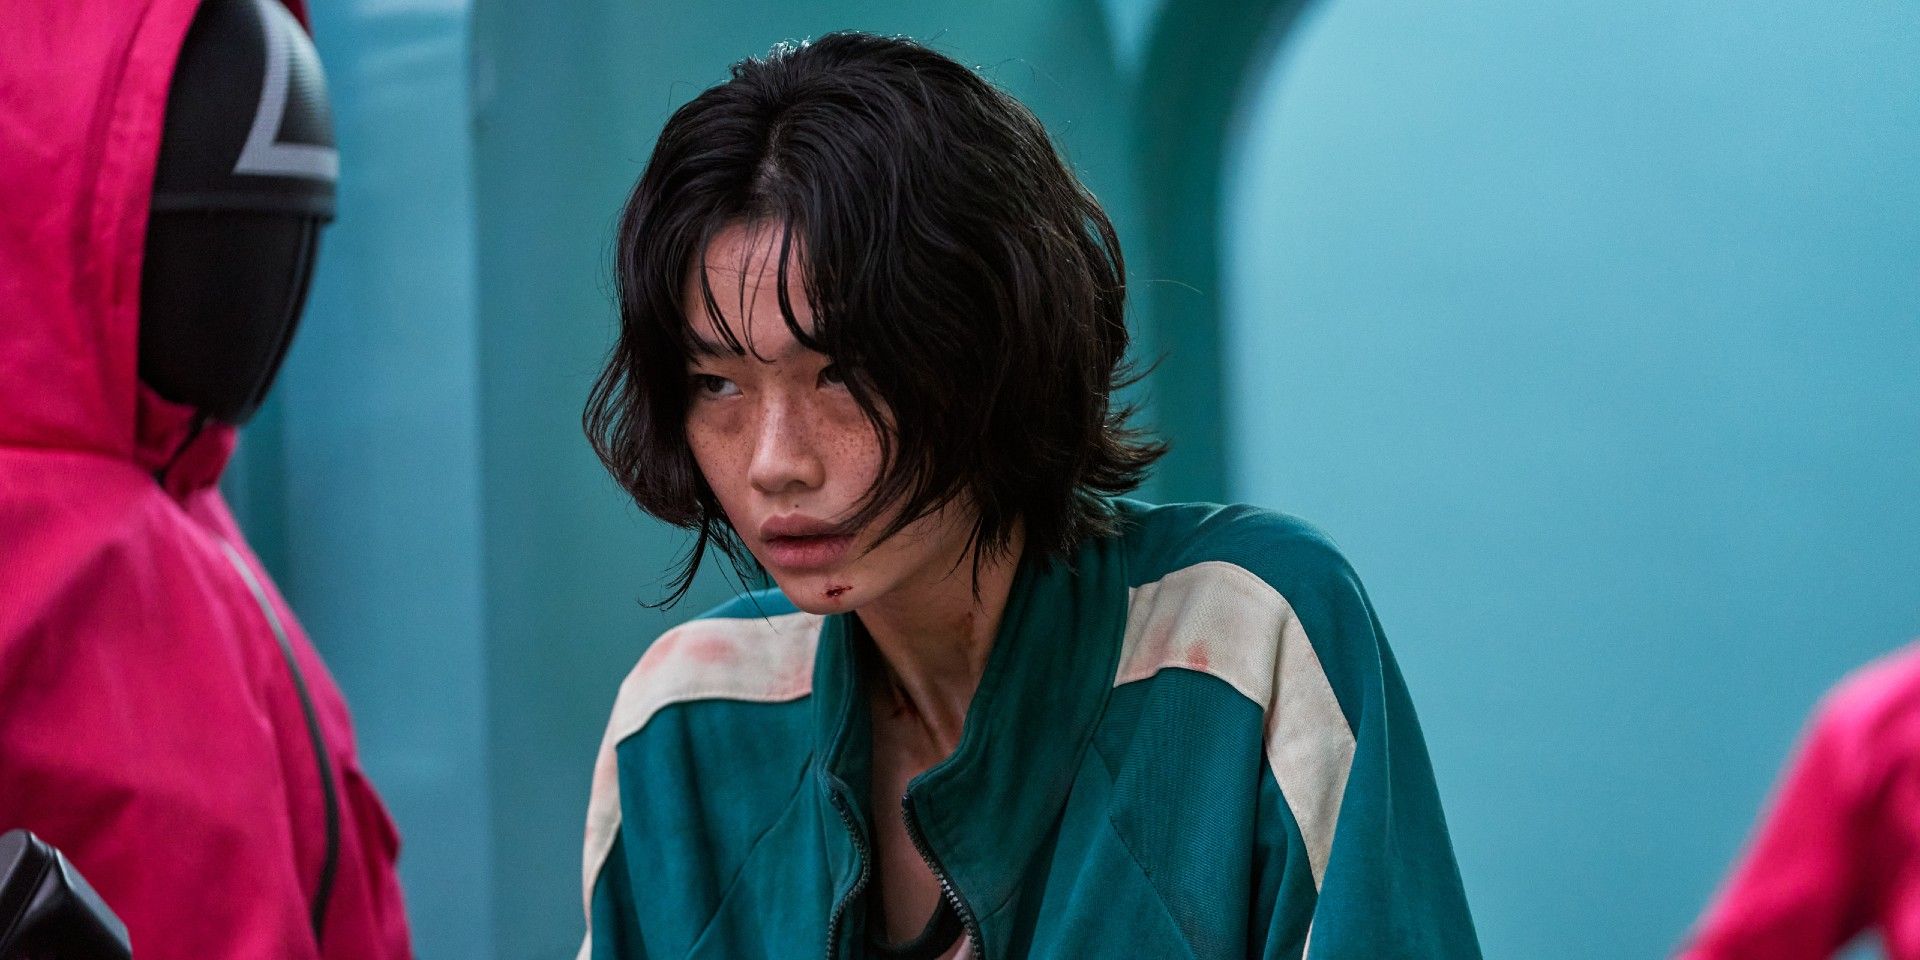 Jung Ho-yeon in Netflix's Squid Game.